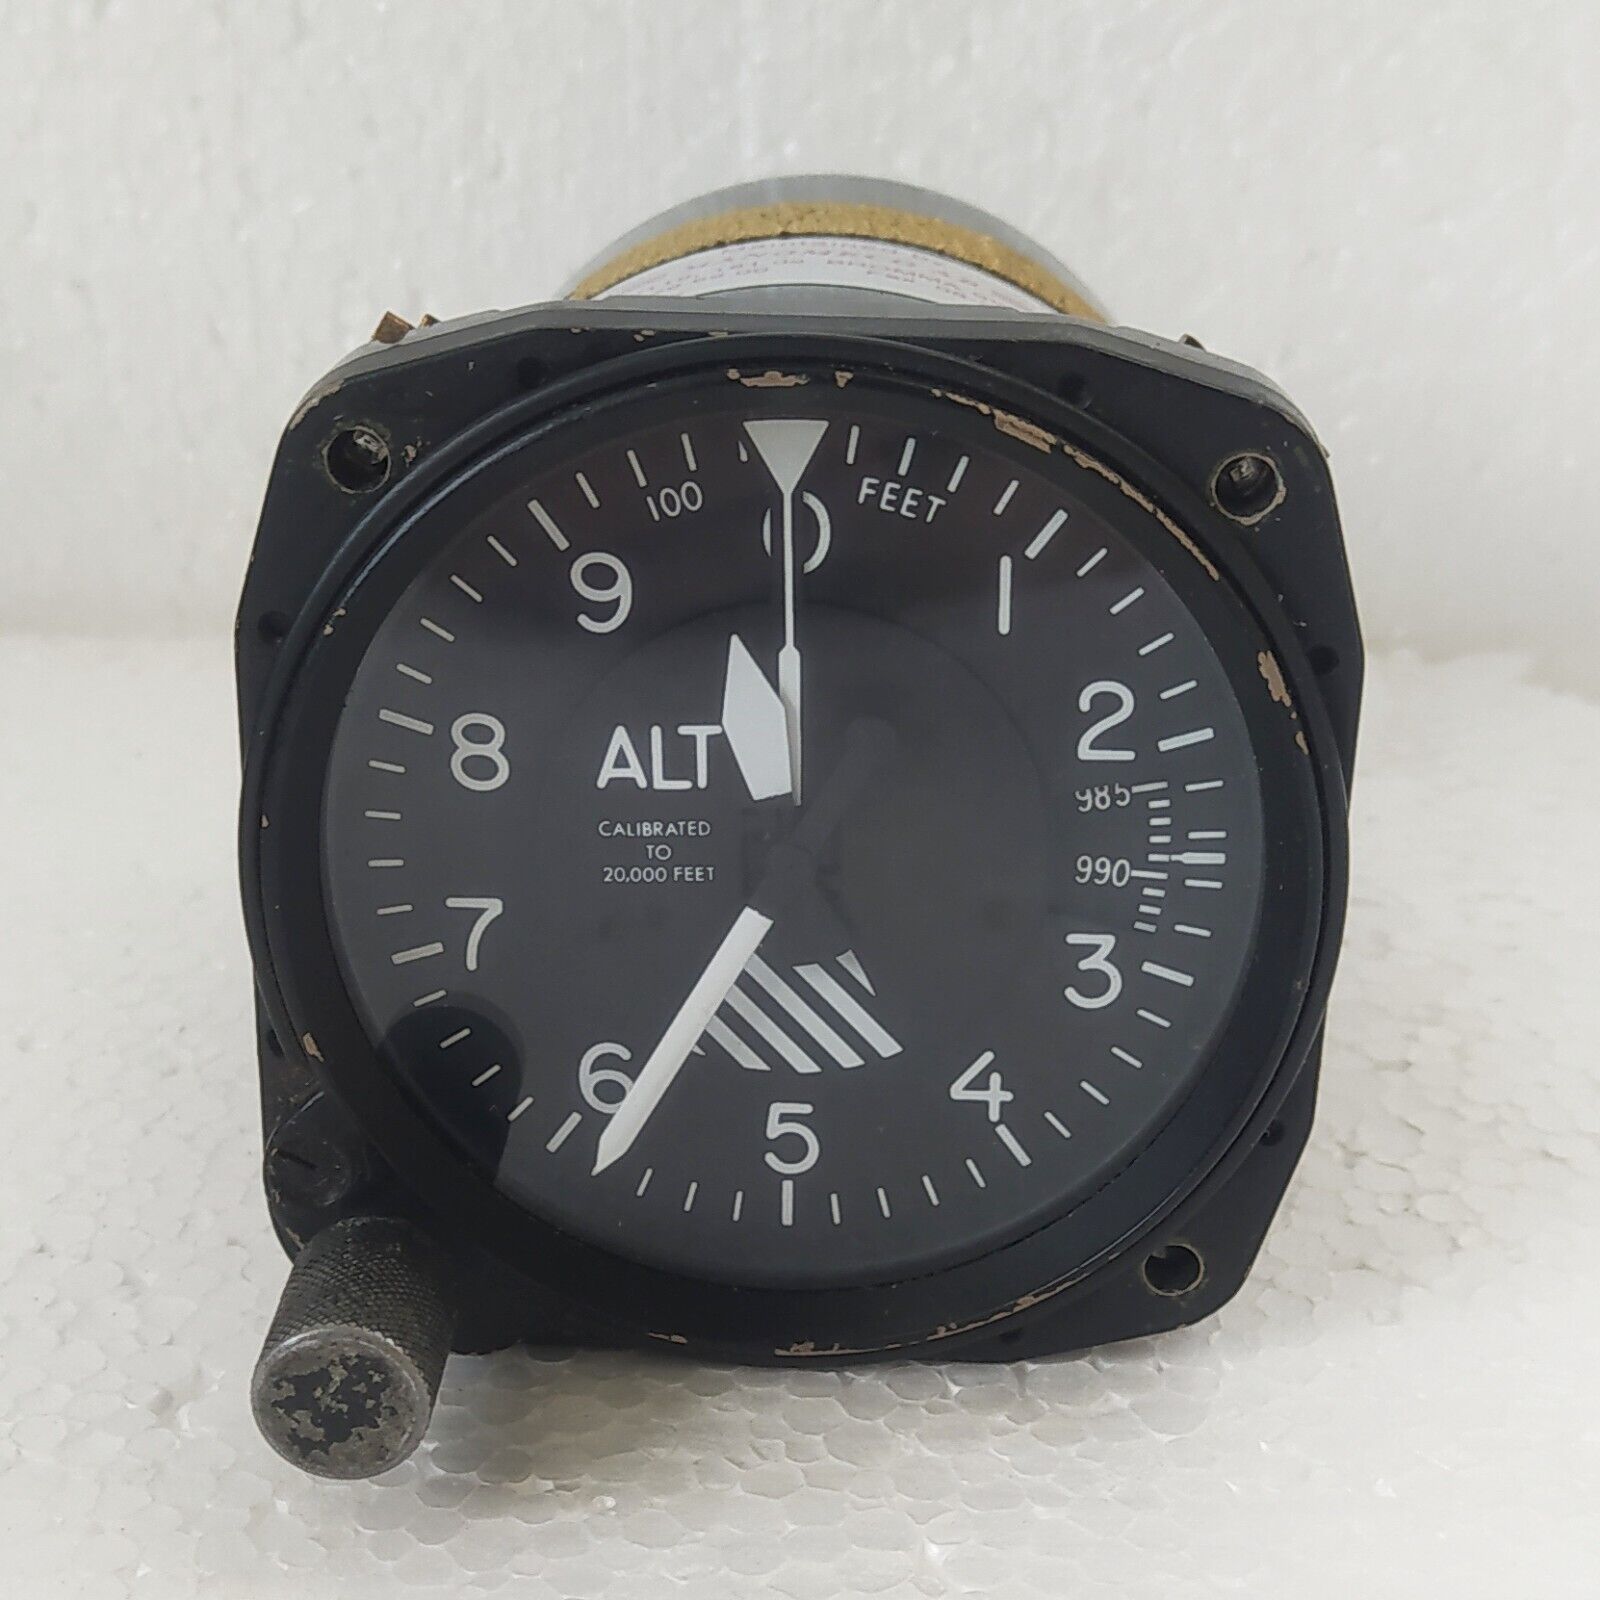 5934PM-1 (s/n L1496) Altimeter, United Instruments